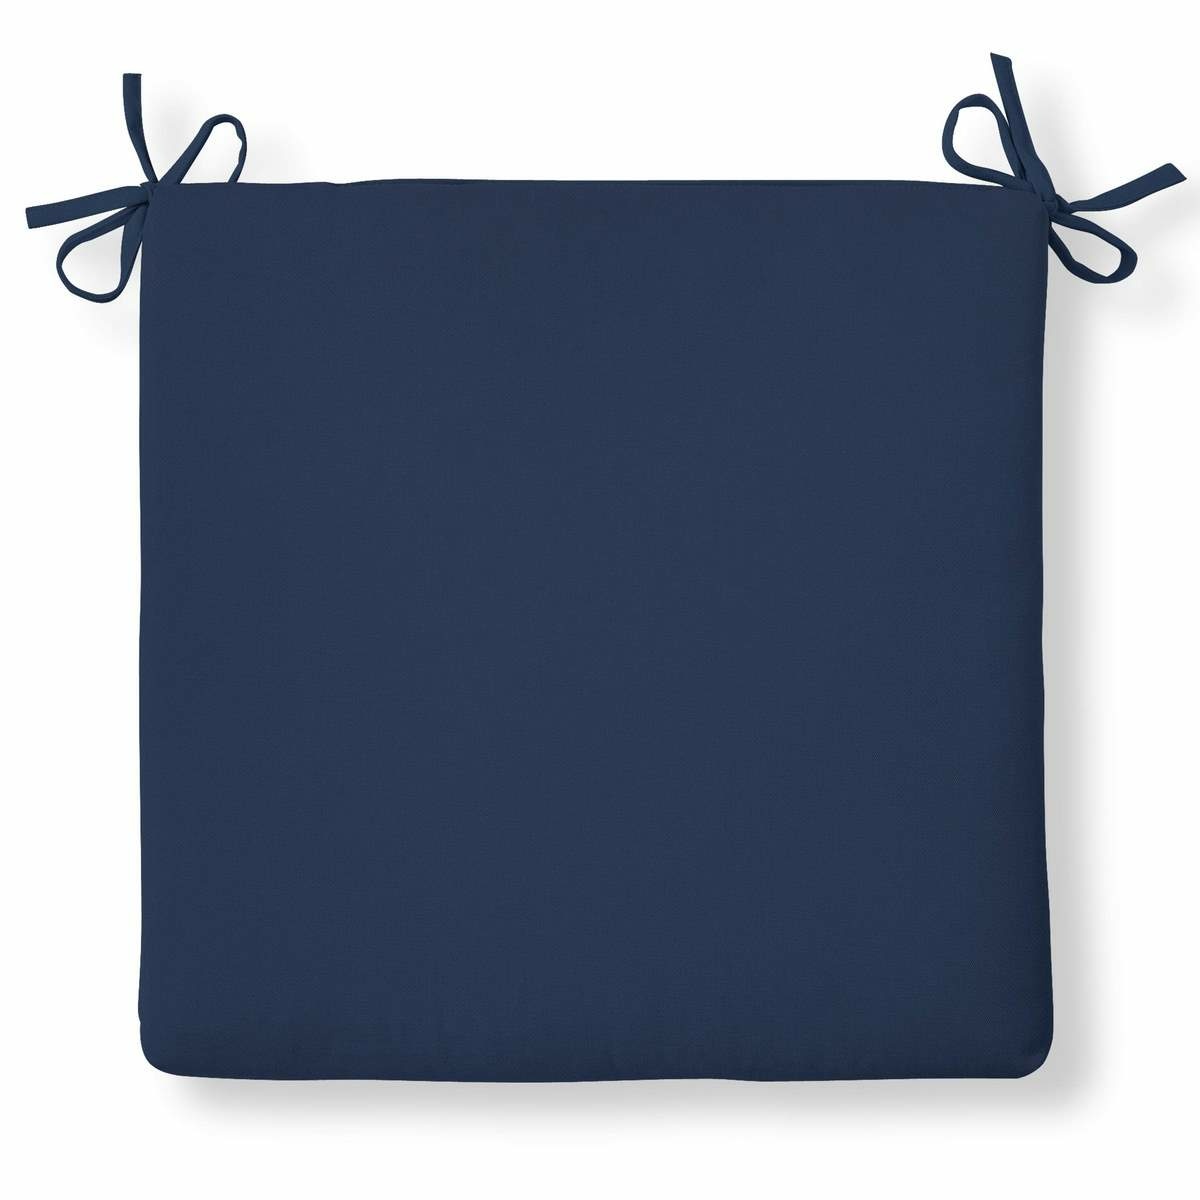 Poza Perna sezut Domarex Oxford Mia impermeabil, albastru inchis, 40 x 40 cm